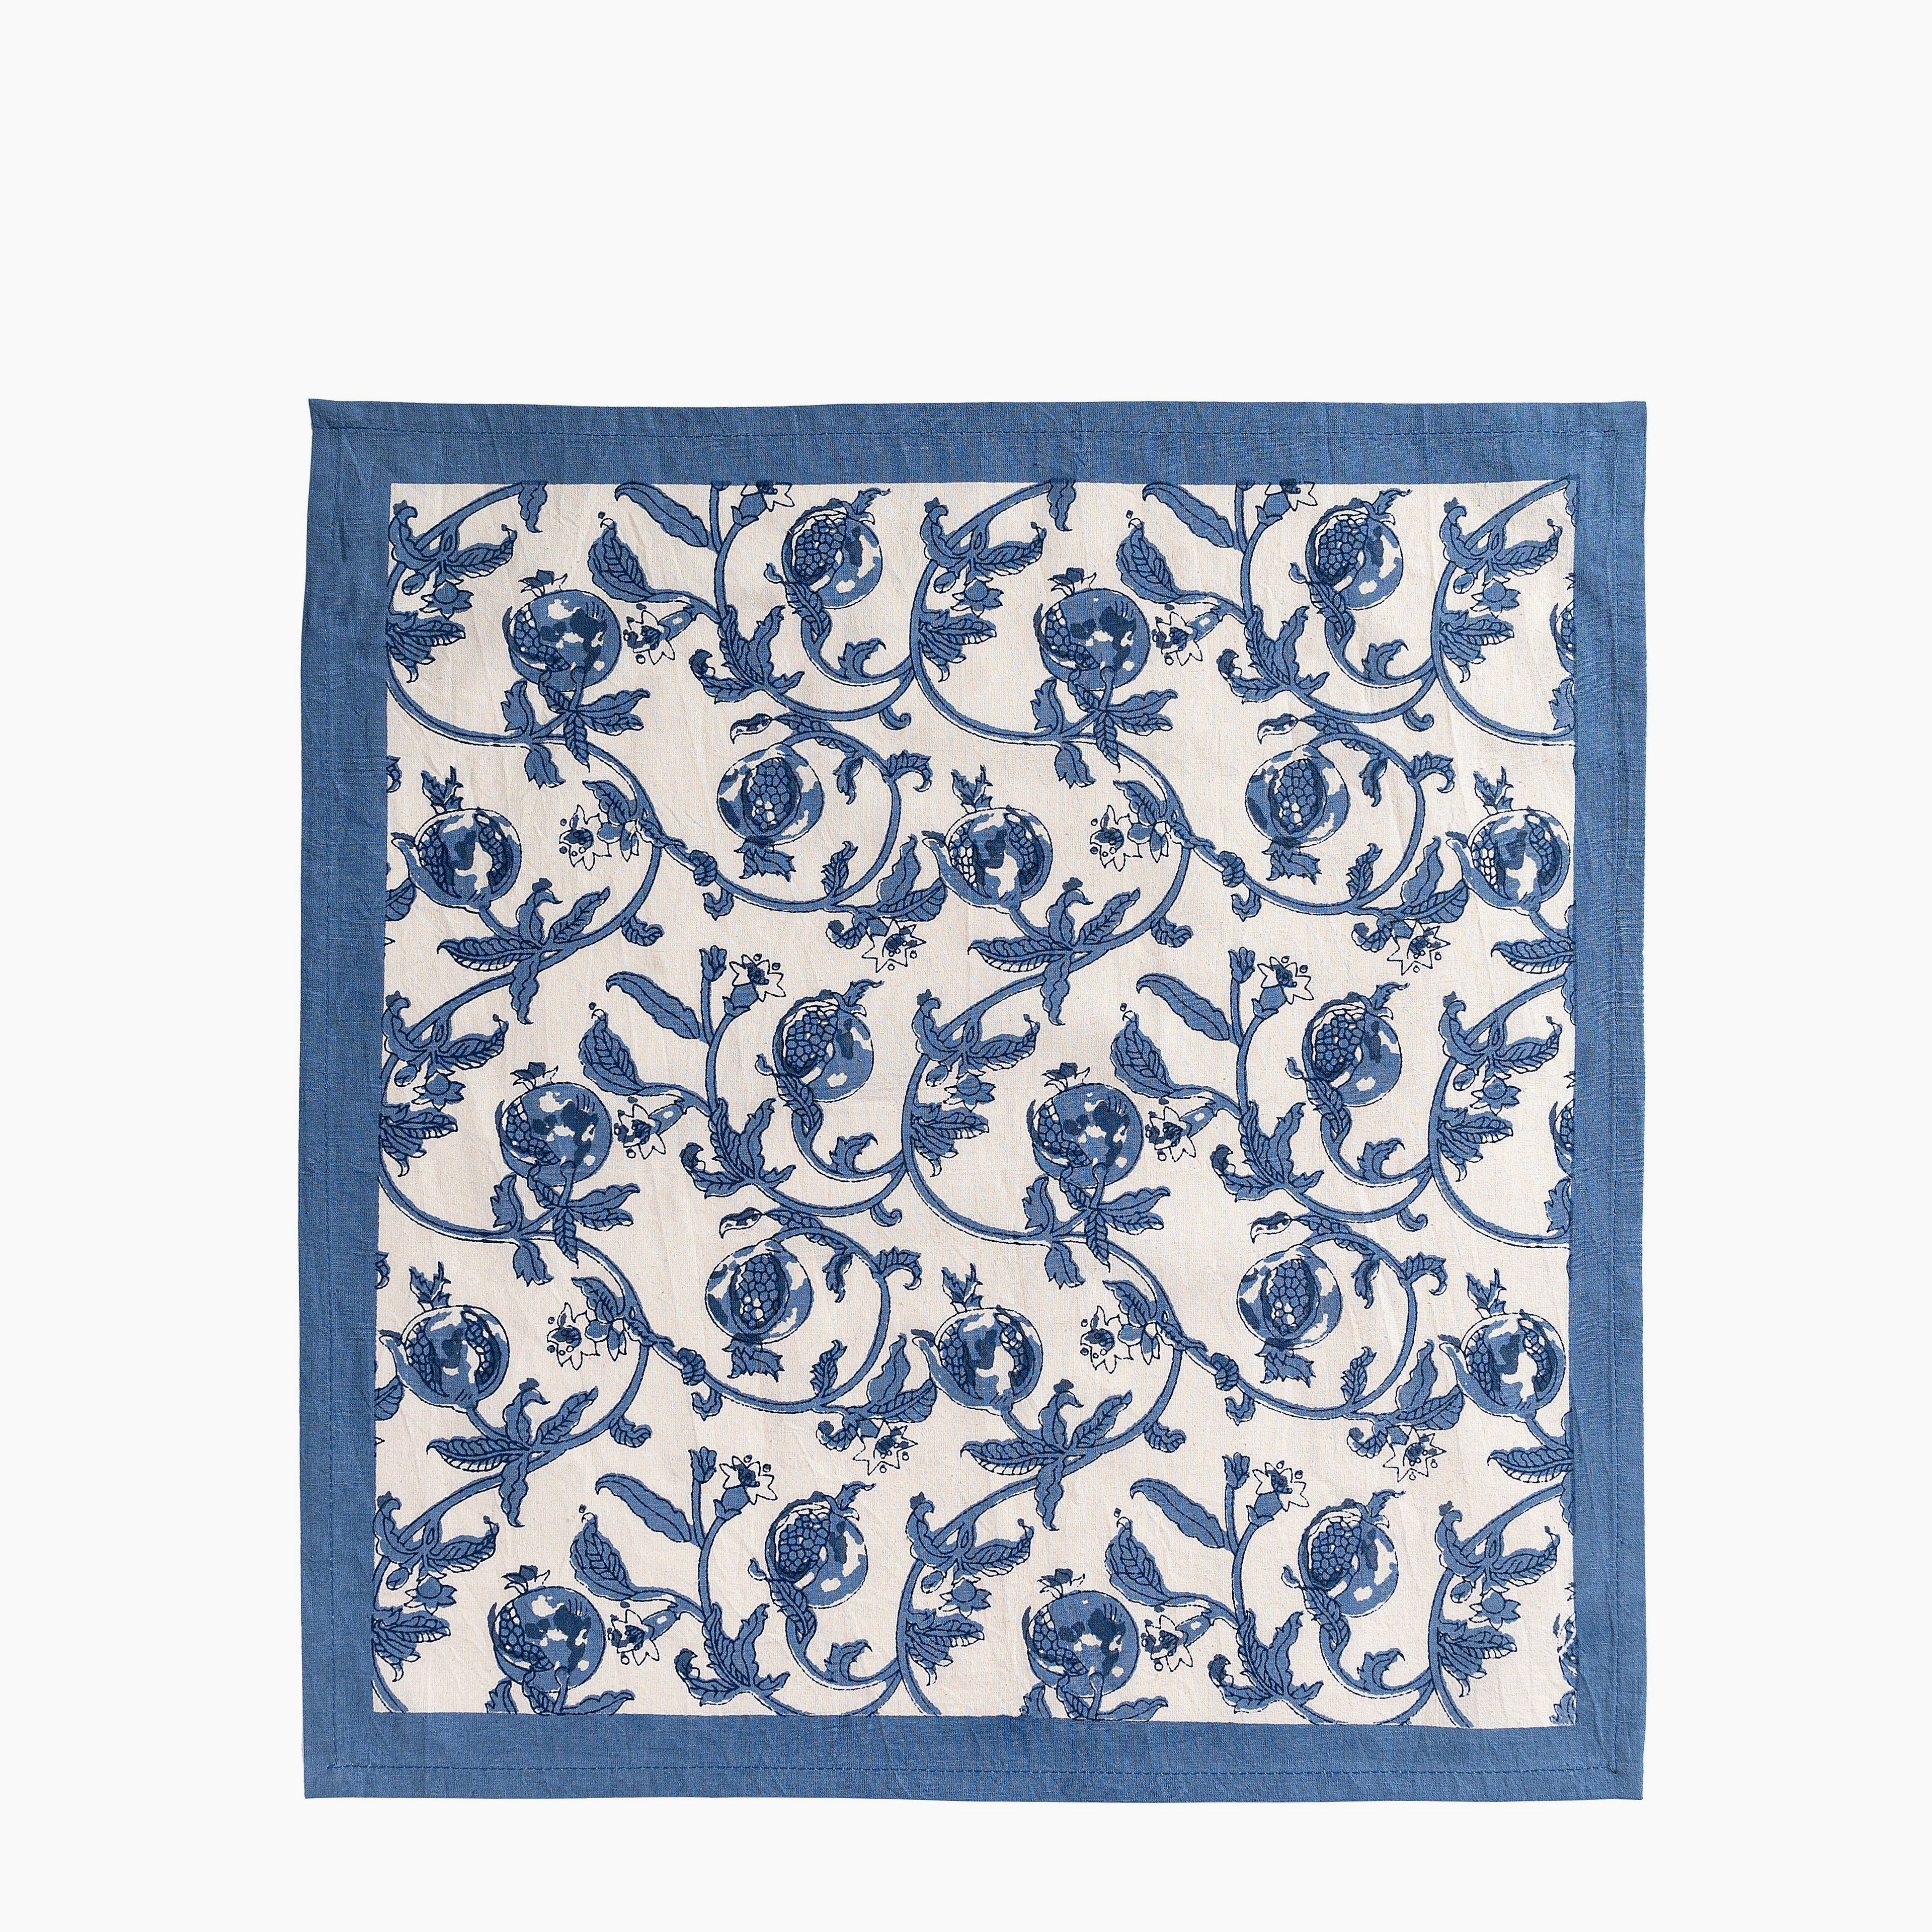 Granada Napkins Cornflower Blue, Set of 6